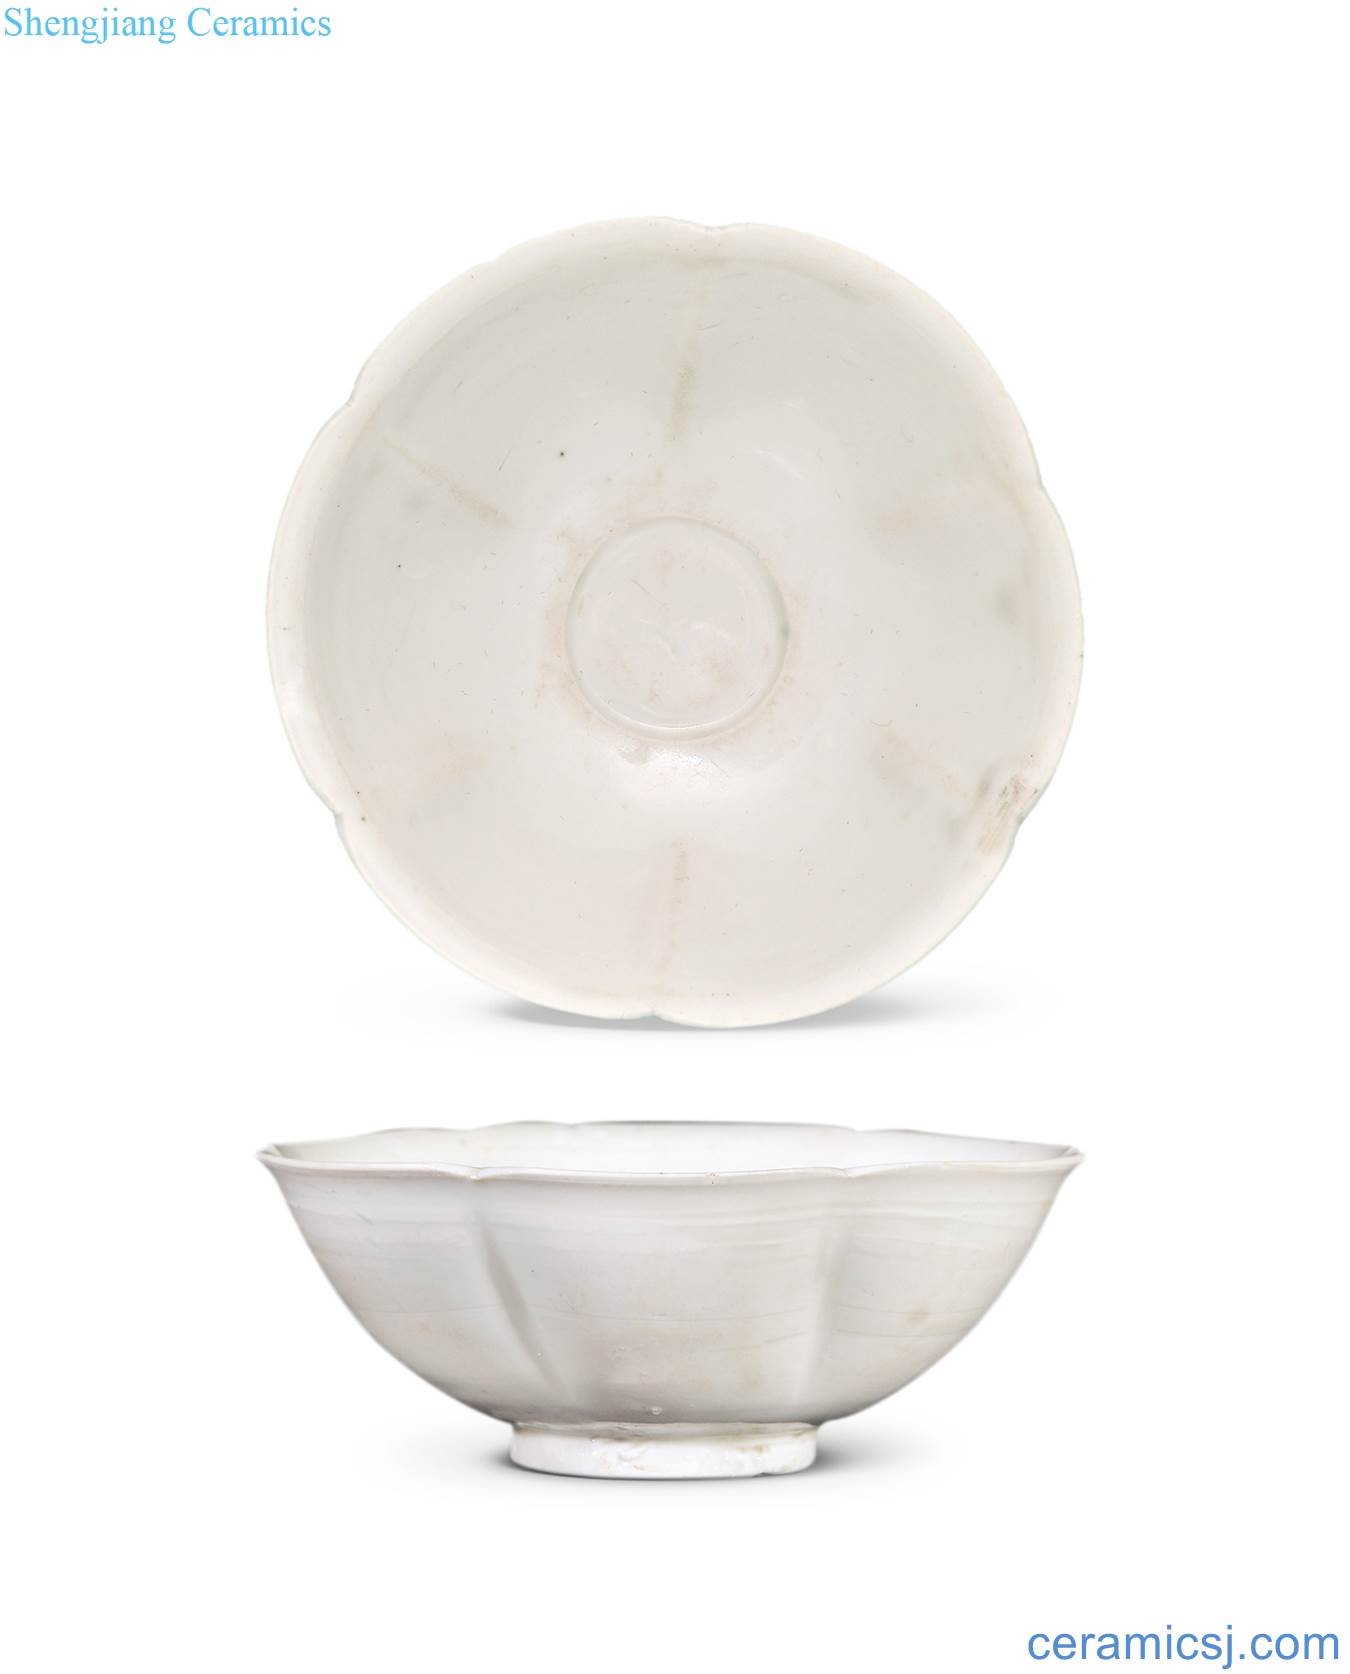 The song kiln porcelain mouth bowl